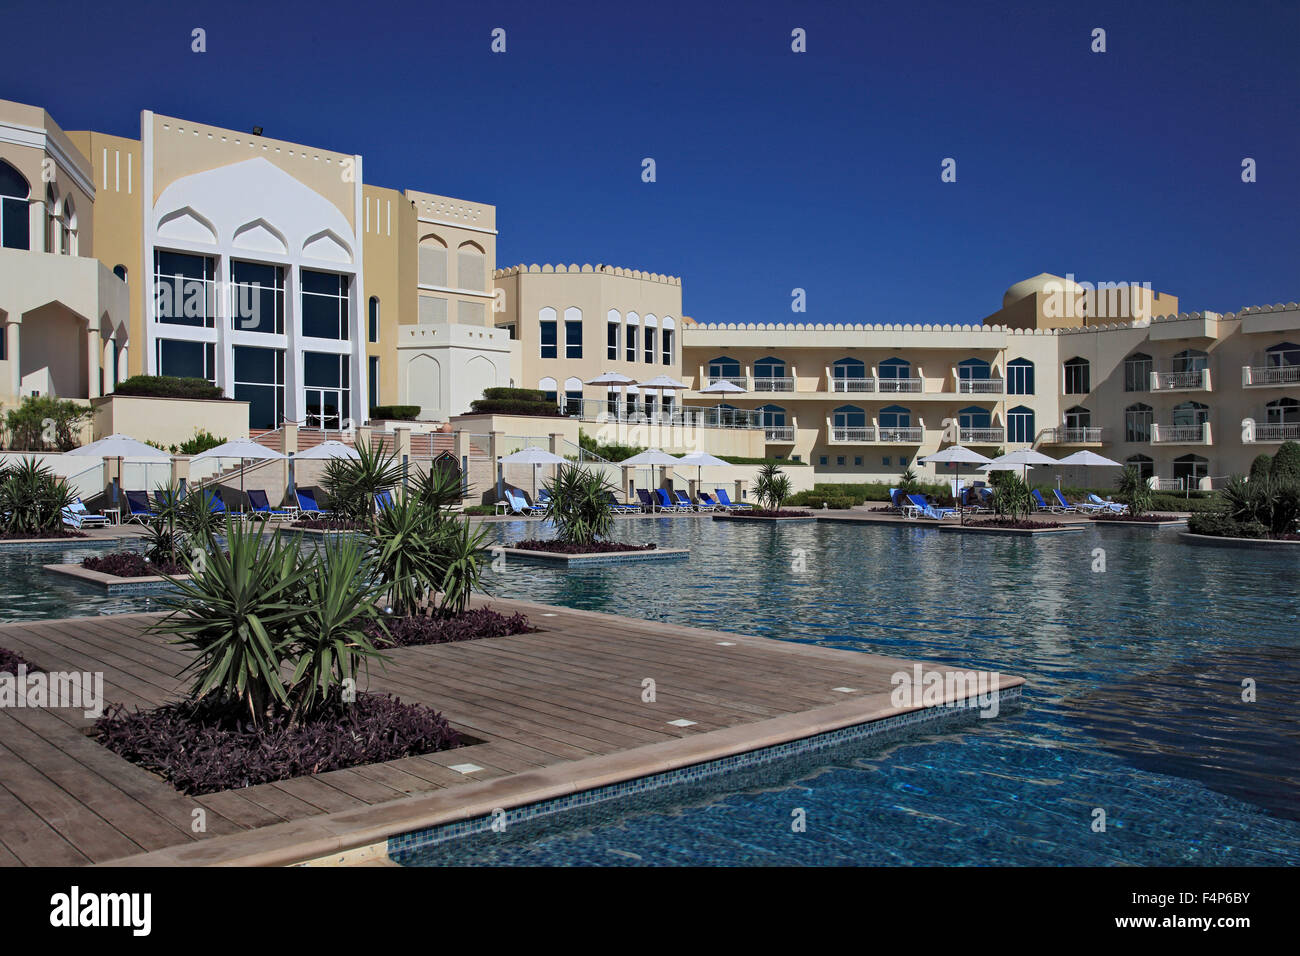 Hotel of Marriott with Mirbat, Oman Stock Photo